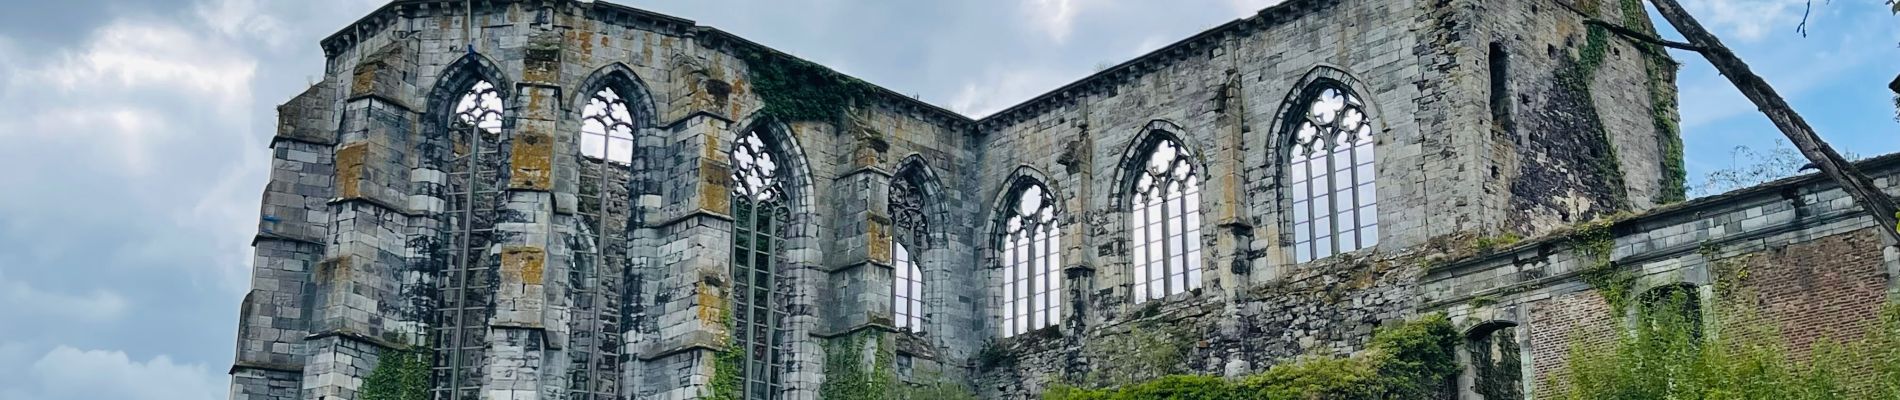 Tour Wandern Thuin - L’abbaye d’Aulne à Thuin - Photo